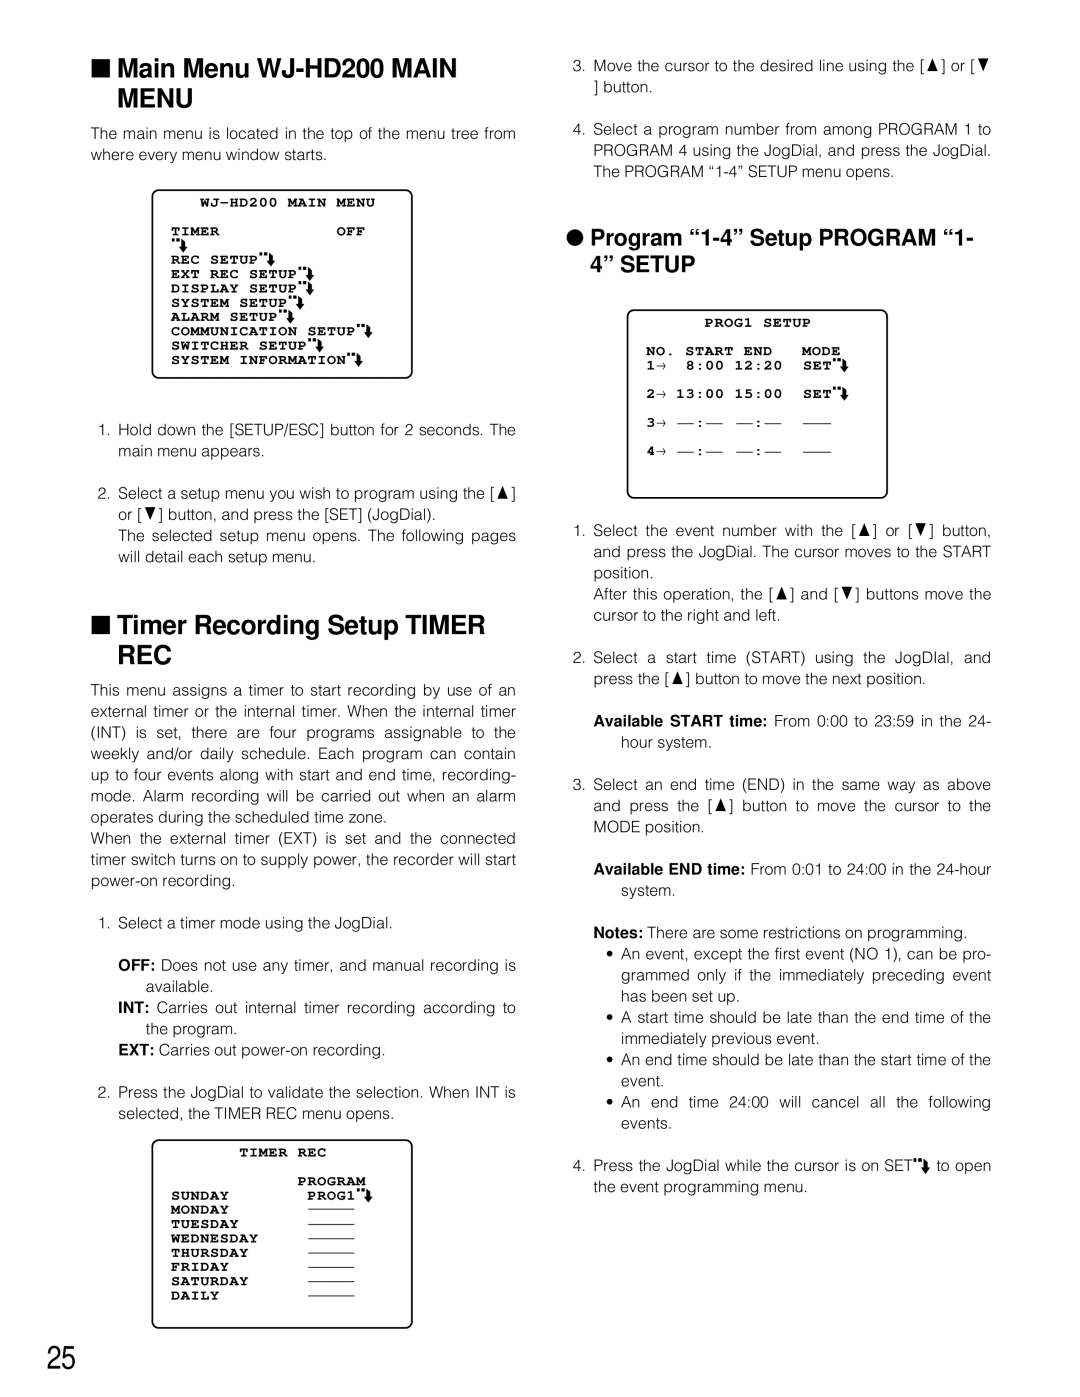 Panasonic manual Main Menu WJ-HD200MAIN MENU, Timer Recording Setup TIMER REC, Program “1-4”Setup PROGRAM “1- 4” SETUP 